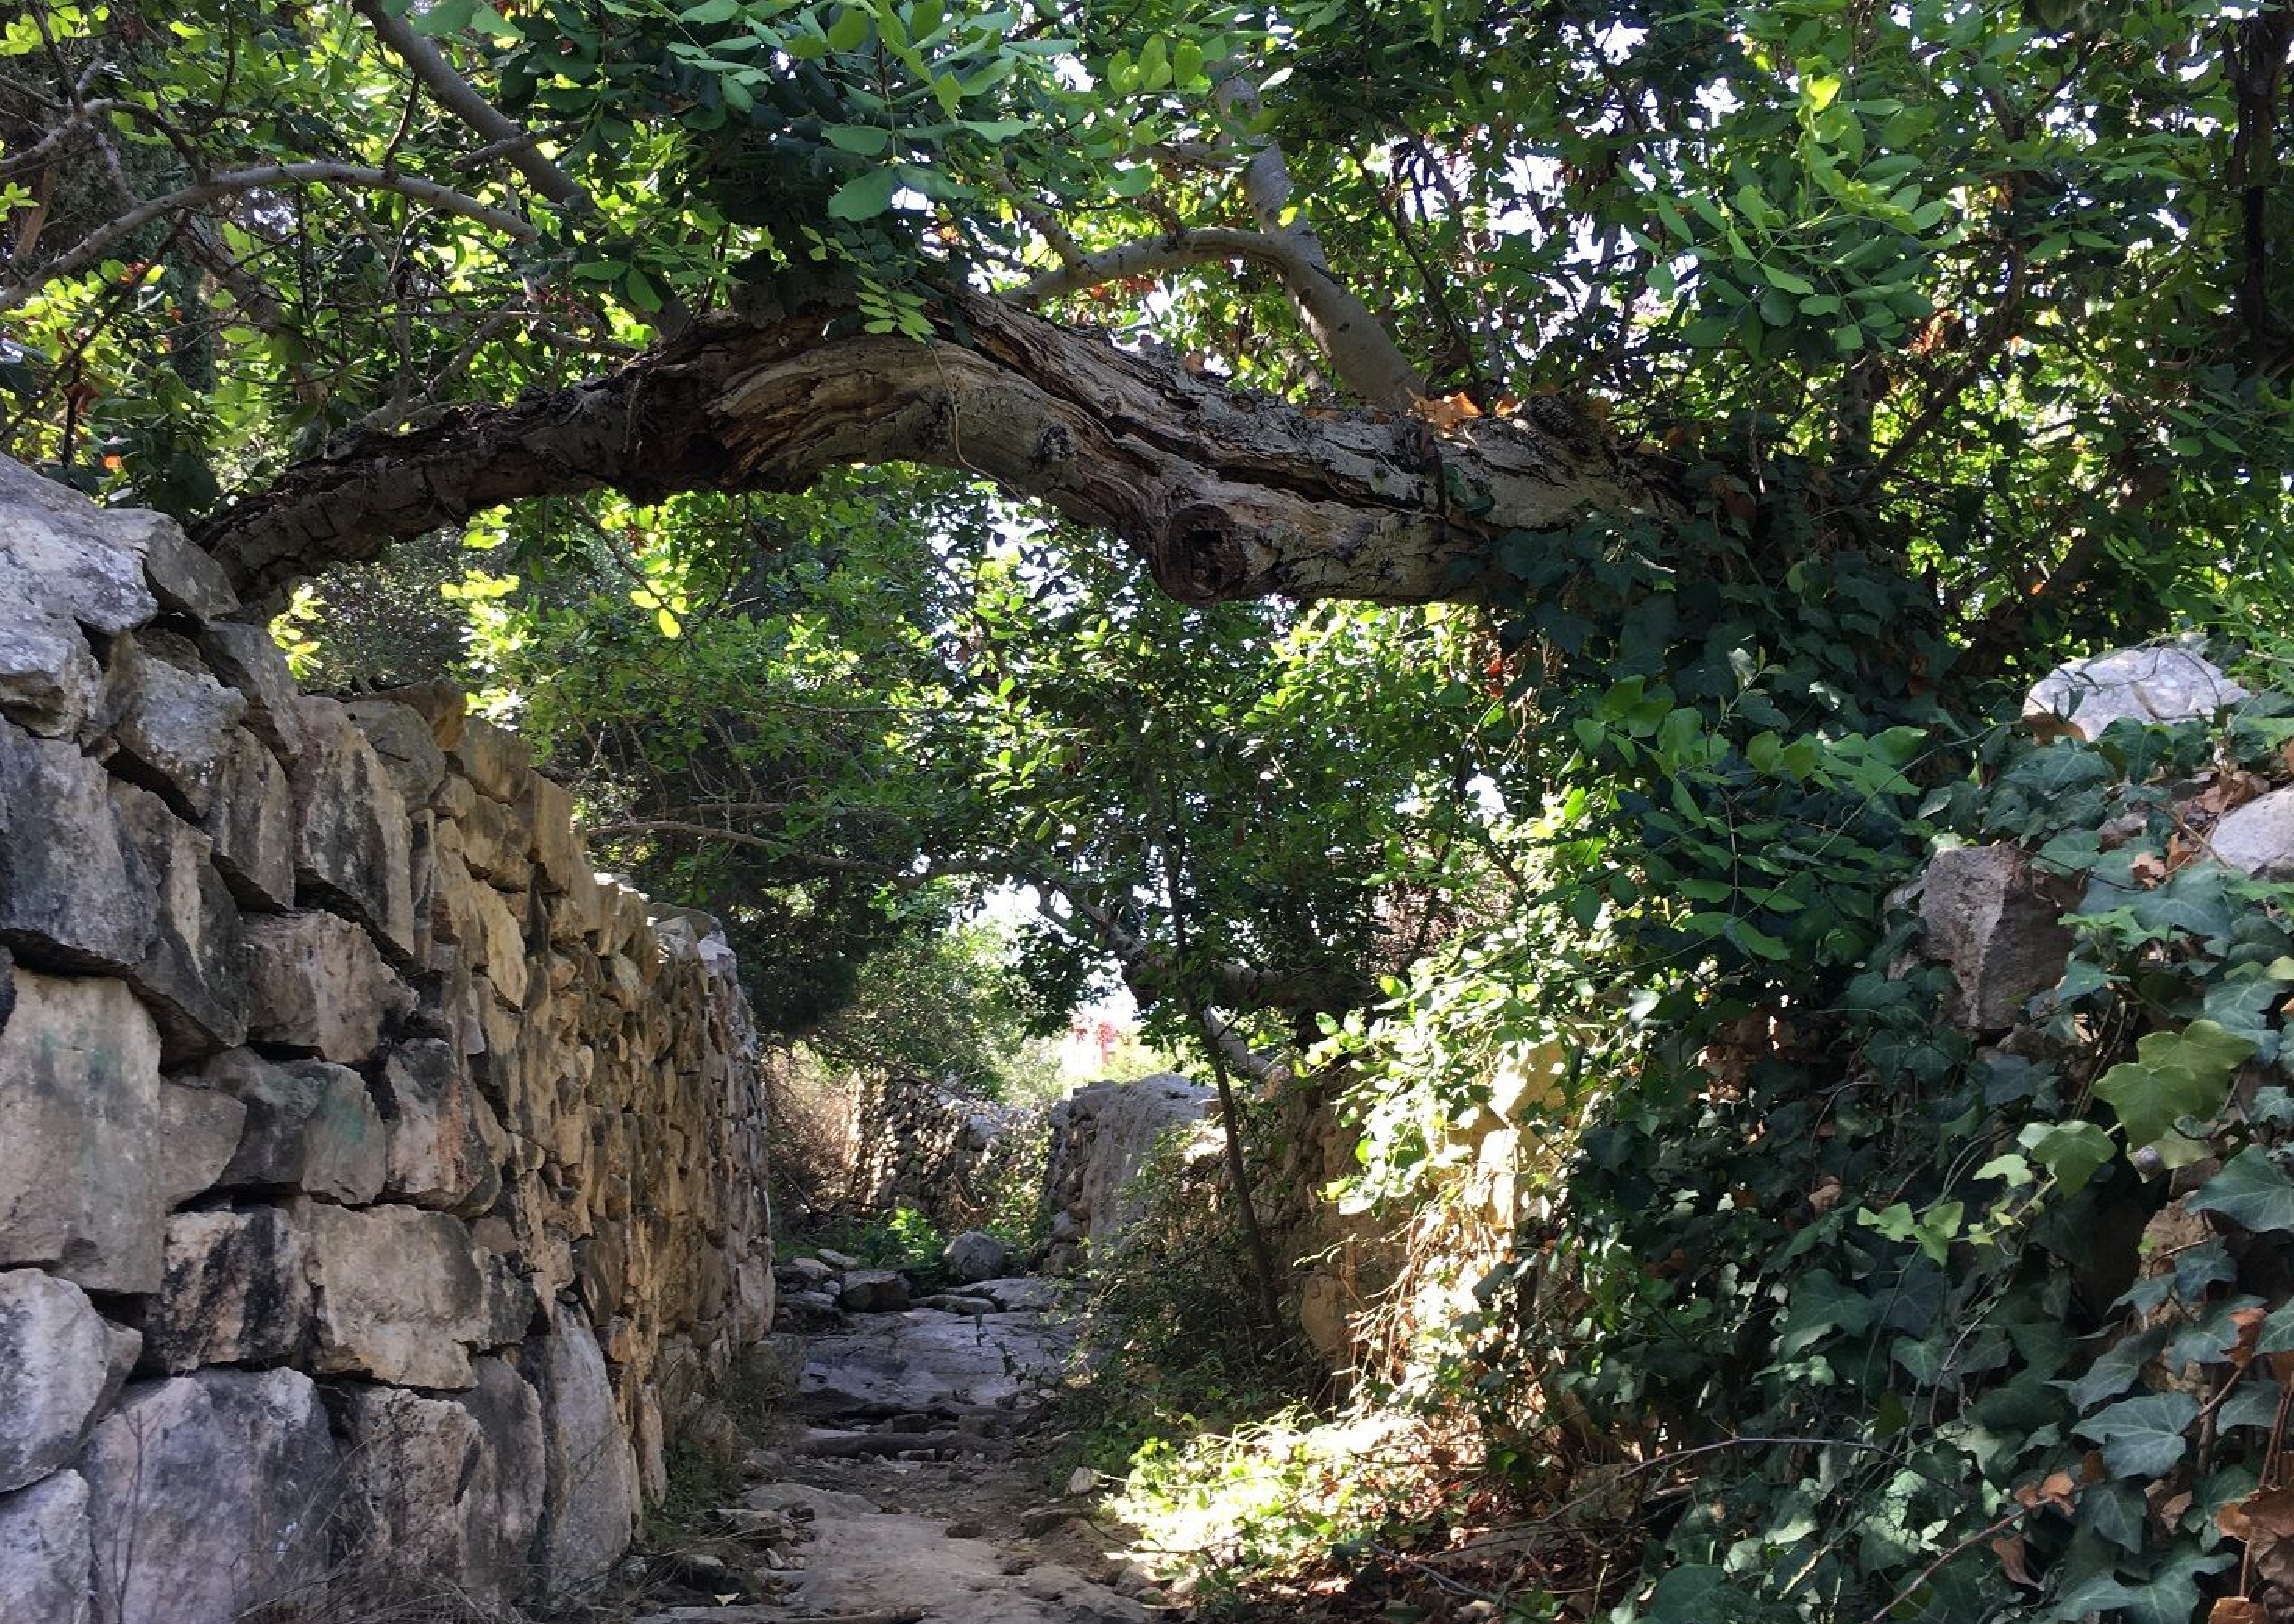 Trees in a pathway Xrobb l-Ghagin